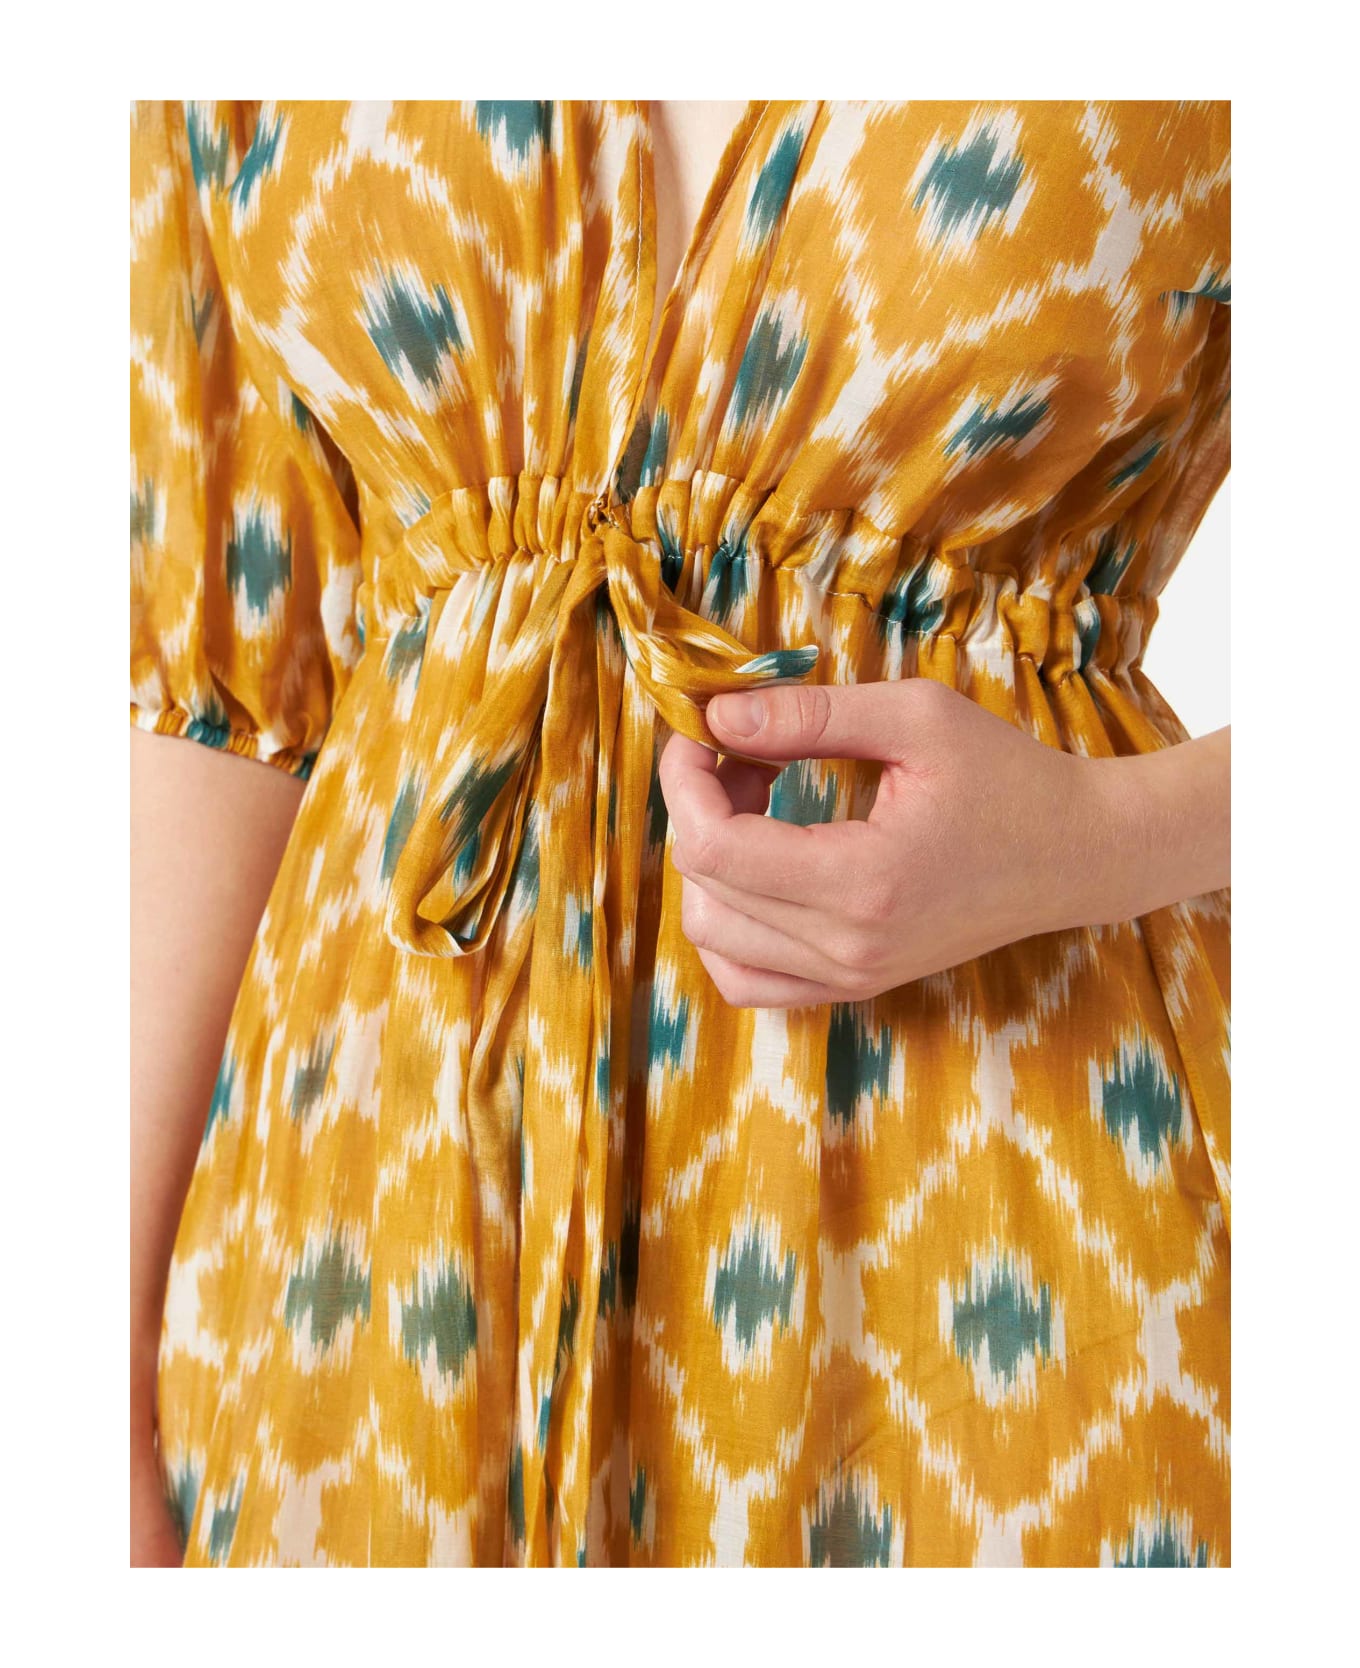 MC2 Saint Barth Cotton And Silk Long Dress Bliss With Geometric Print - YELLOW